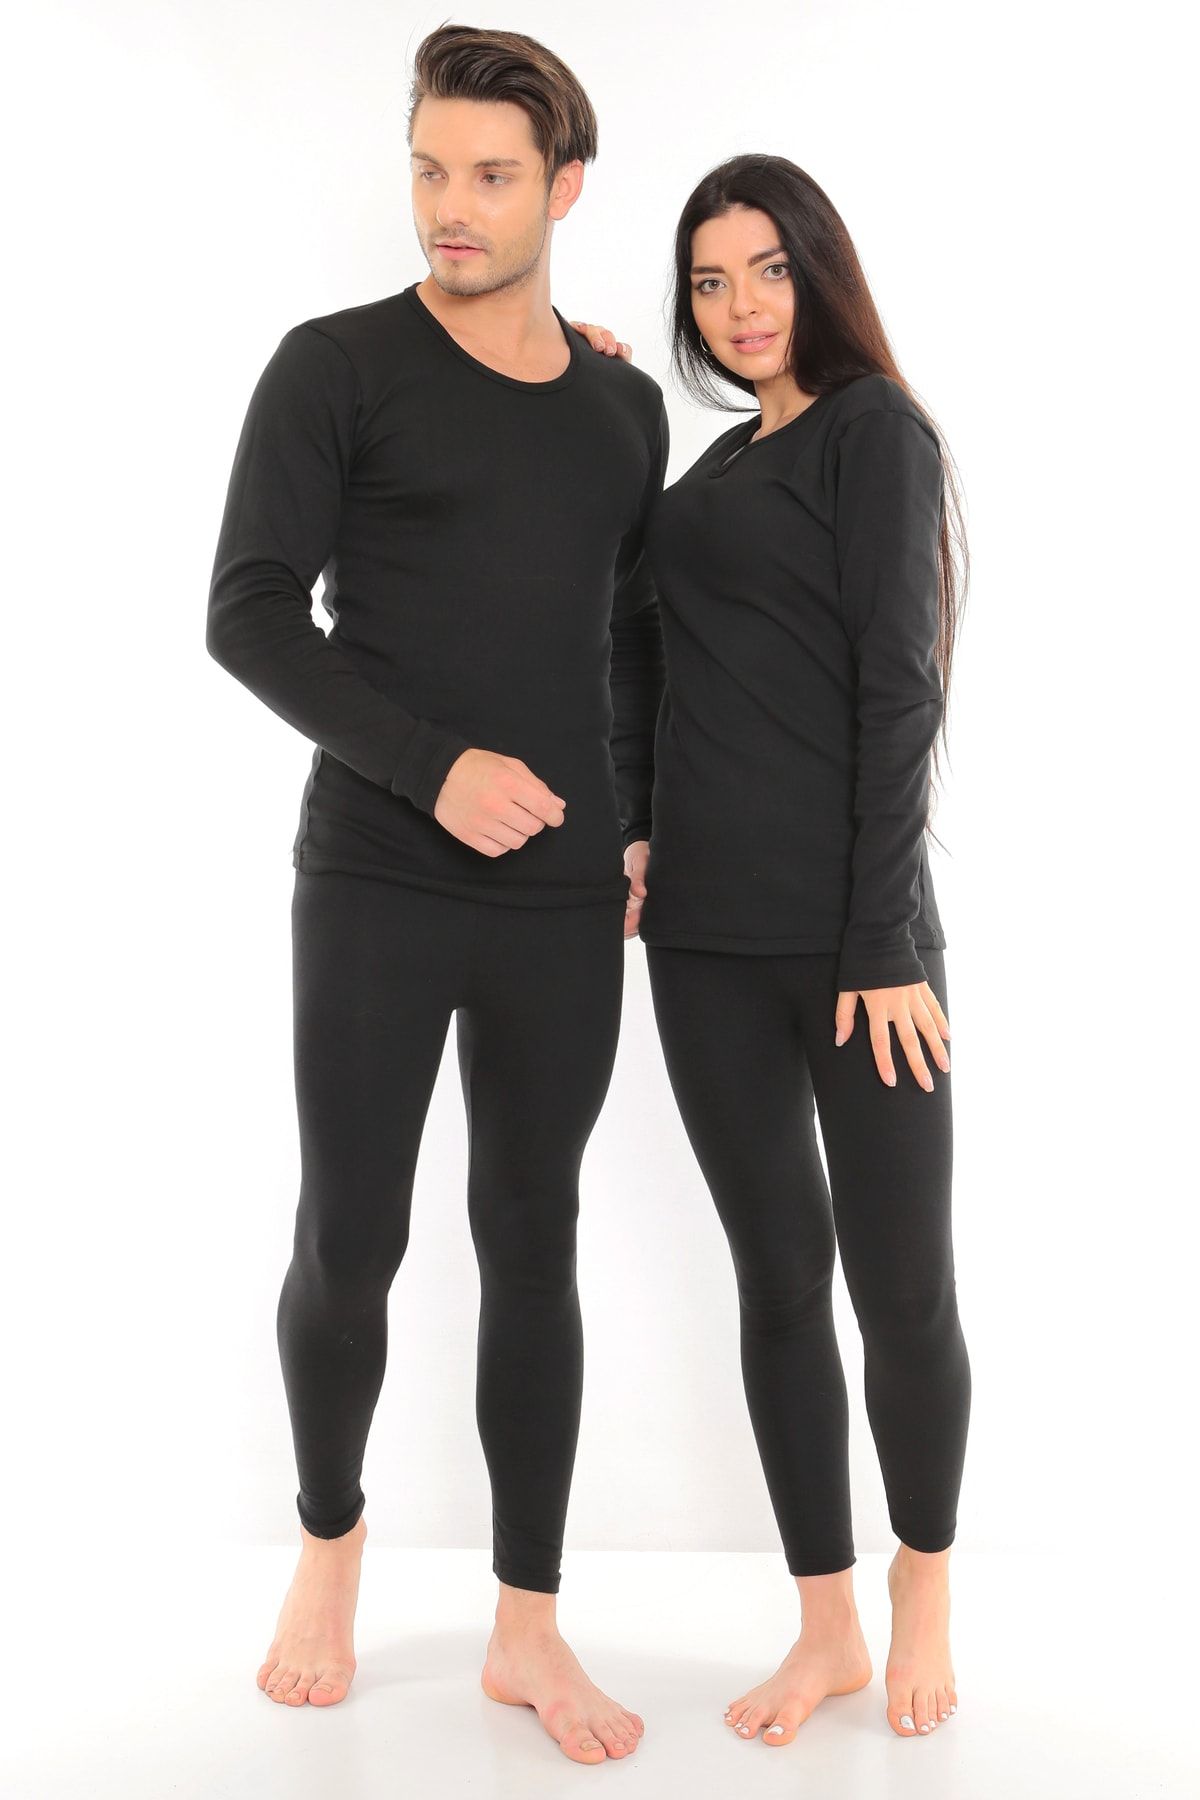 Isıl Termal Unisex Winter Thermal Suit with Fleece Inner  Thermal  Undershirt and Thermal Tights Underwear - Trendyol